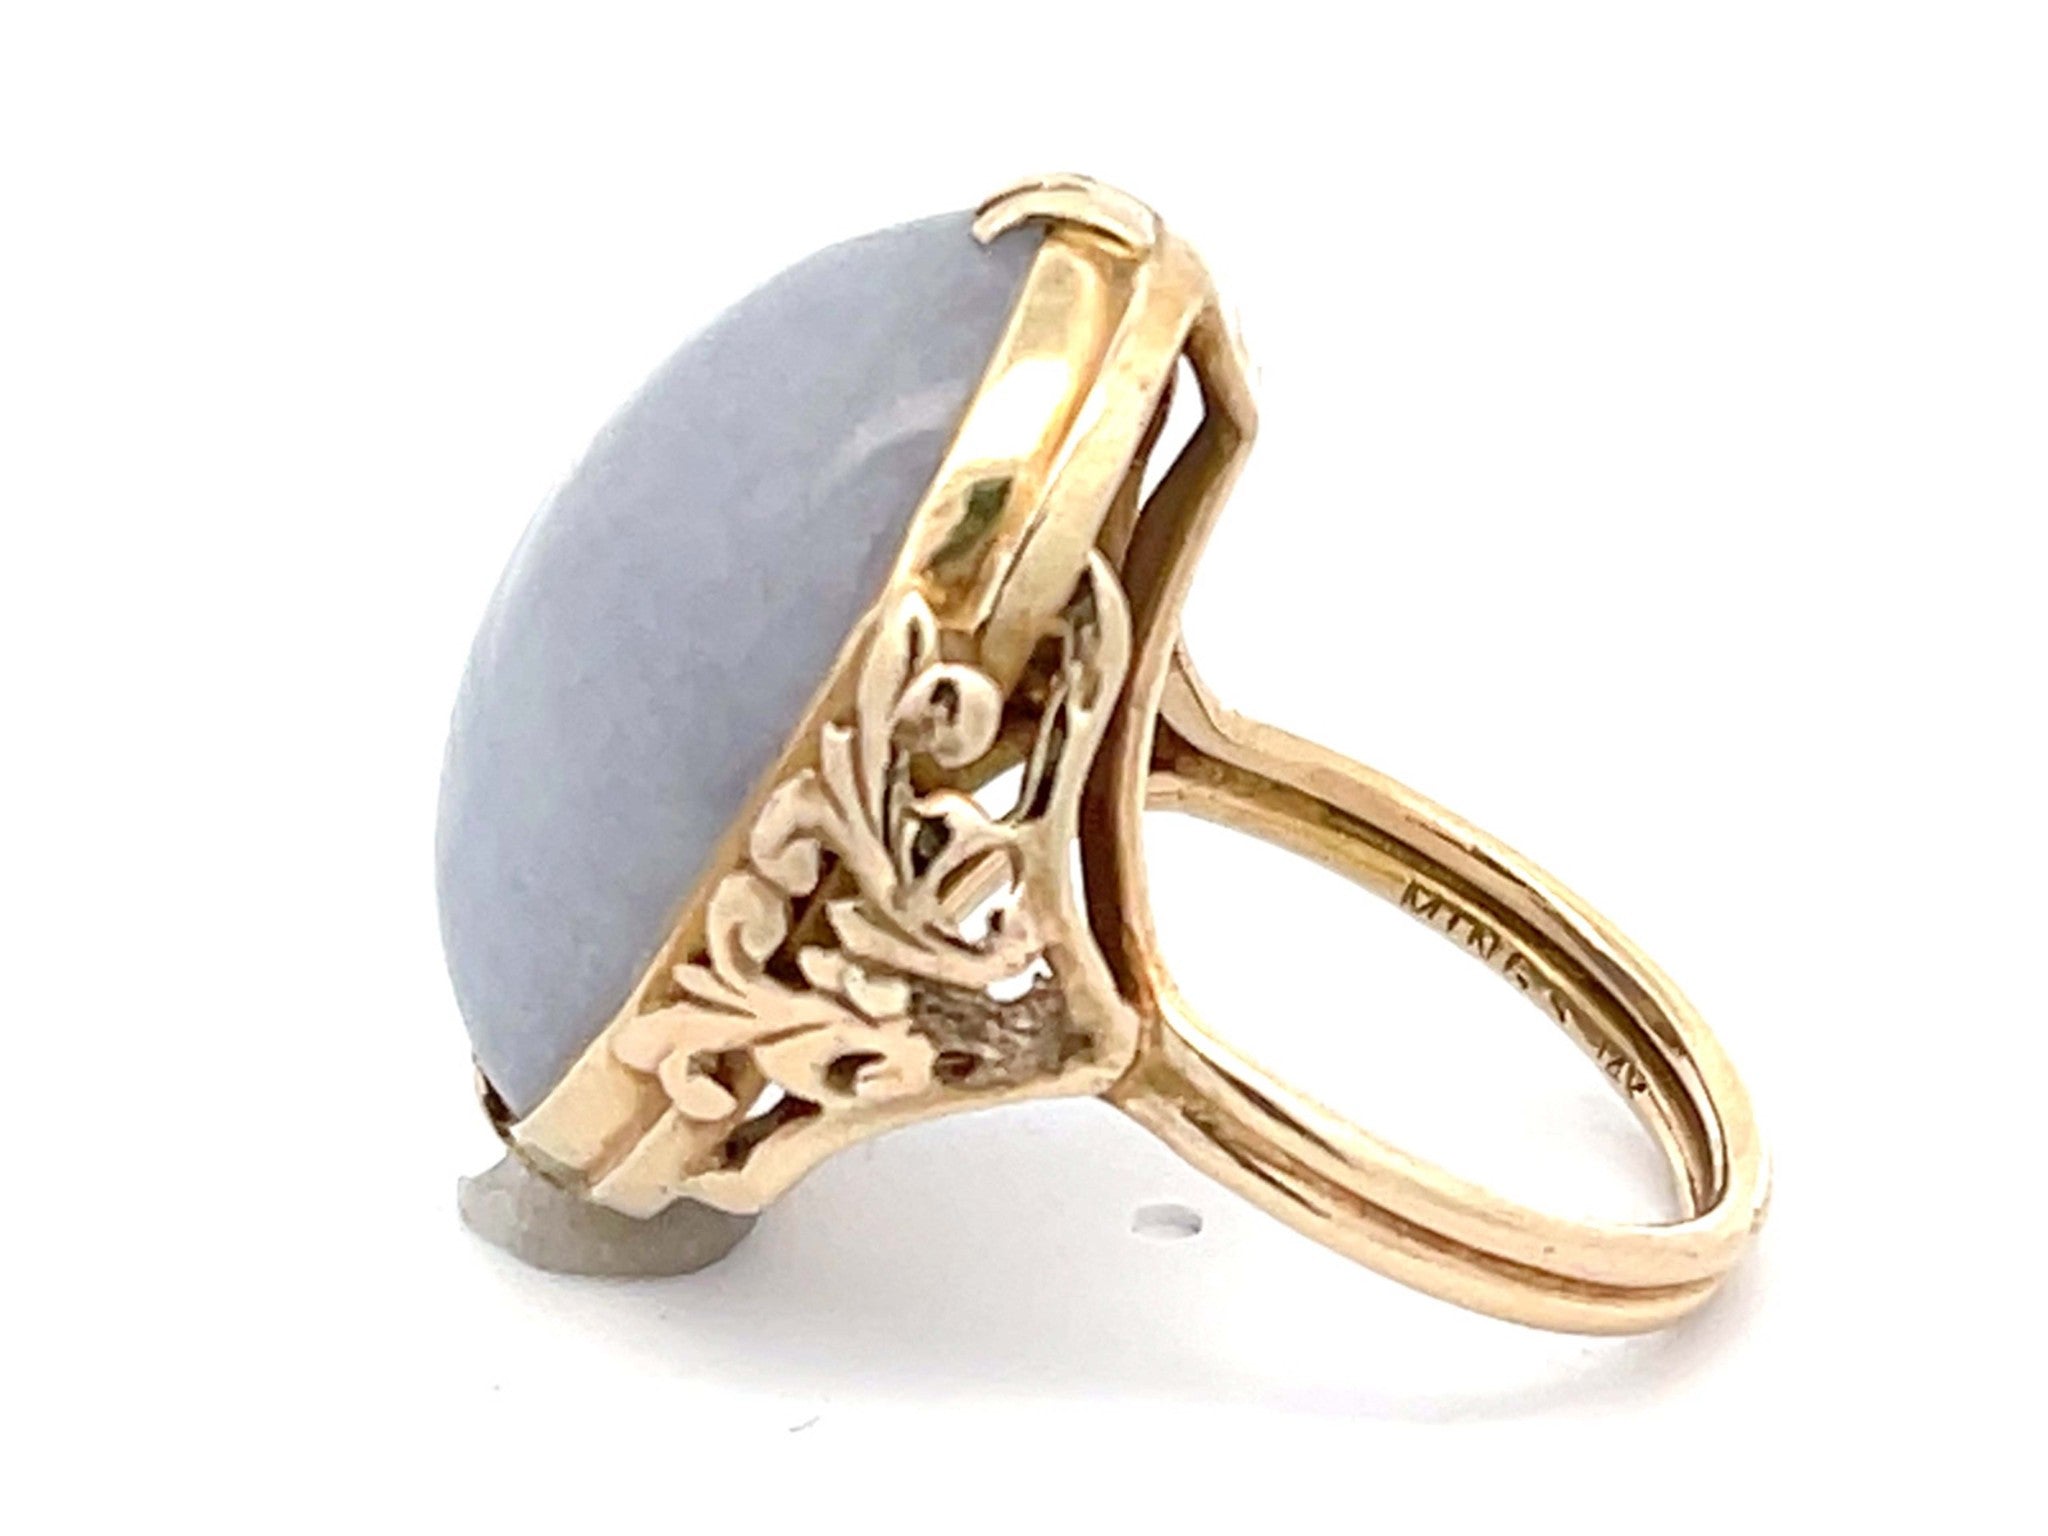 Mings Bluish Grey Oval Jade Ring in 14k Yellow Gold